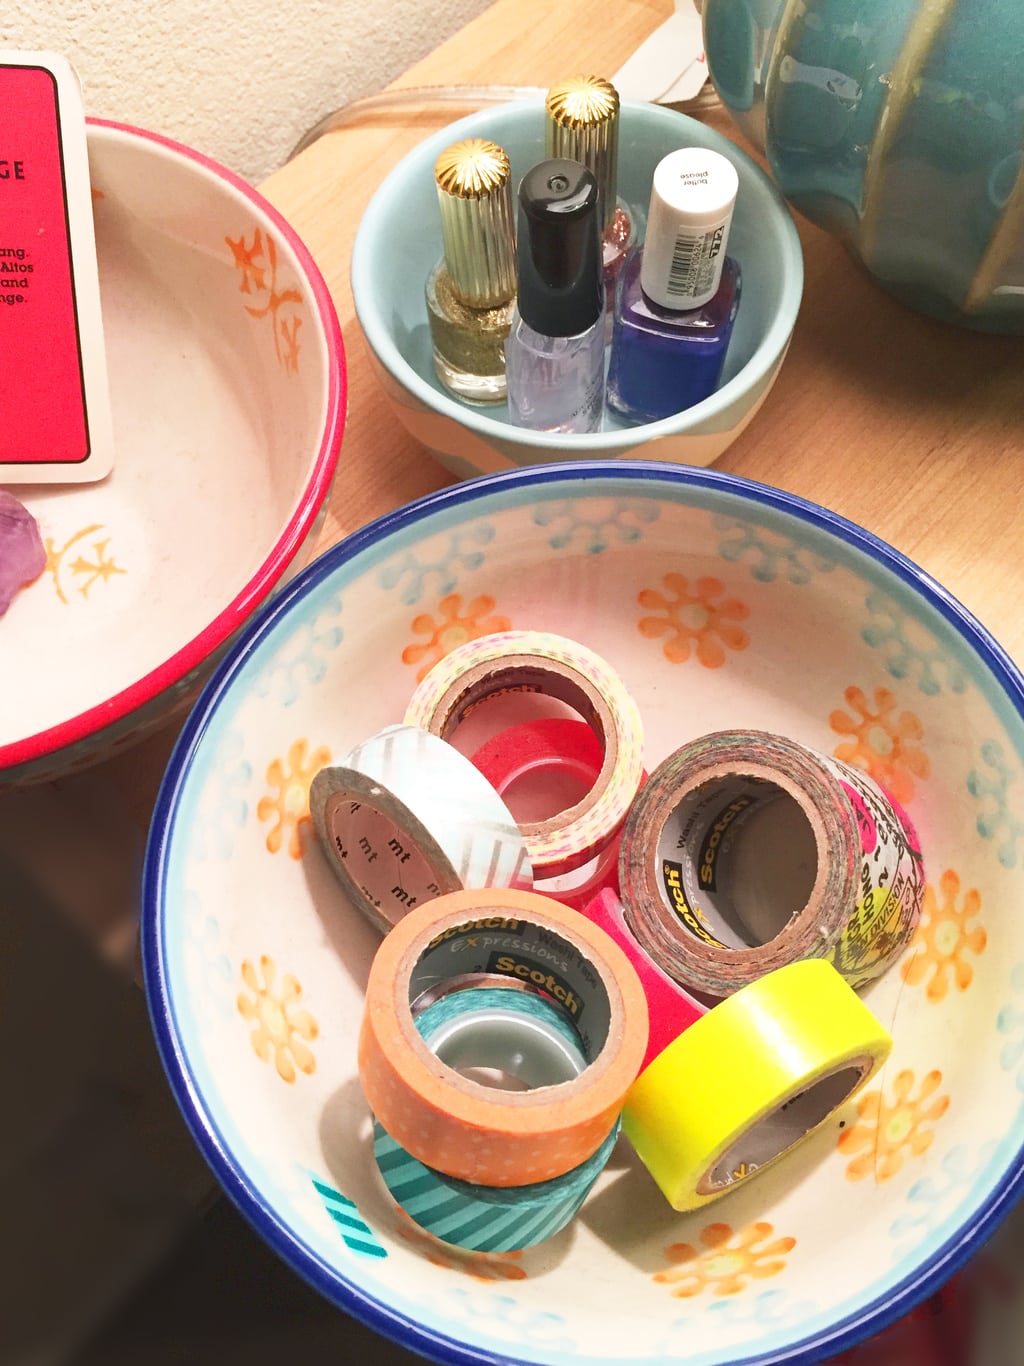 Using cute bowls to hold washi tape and nail polish - apartment decor